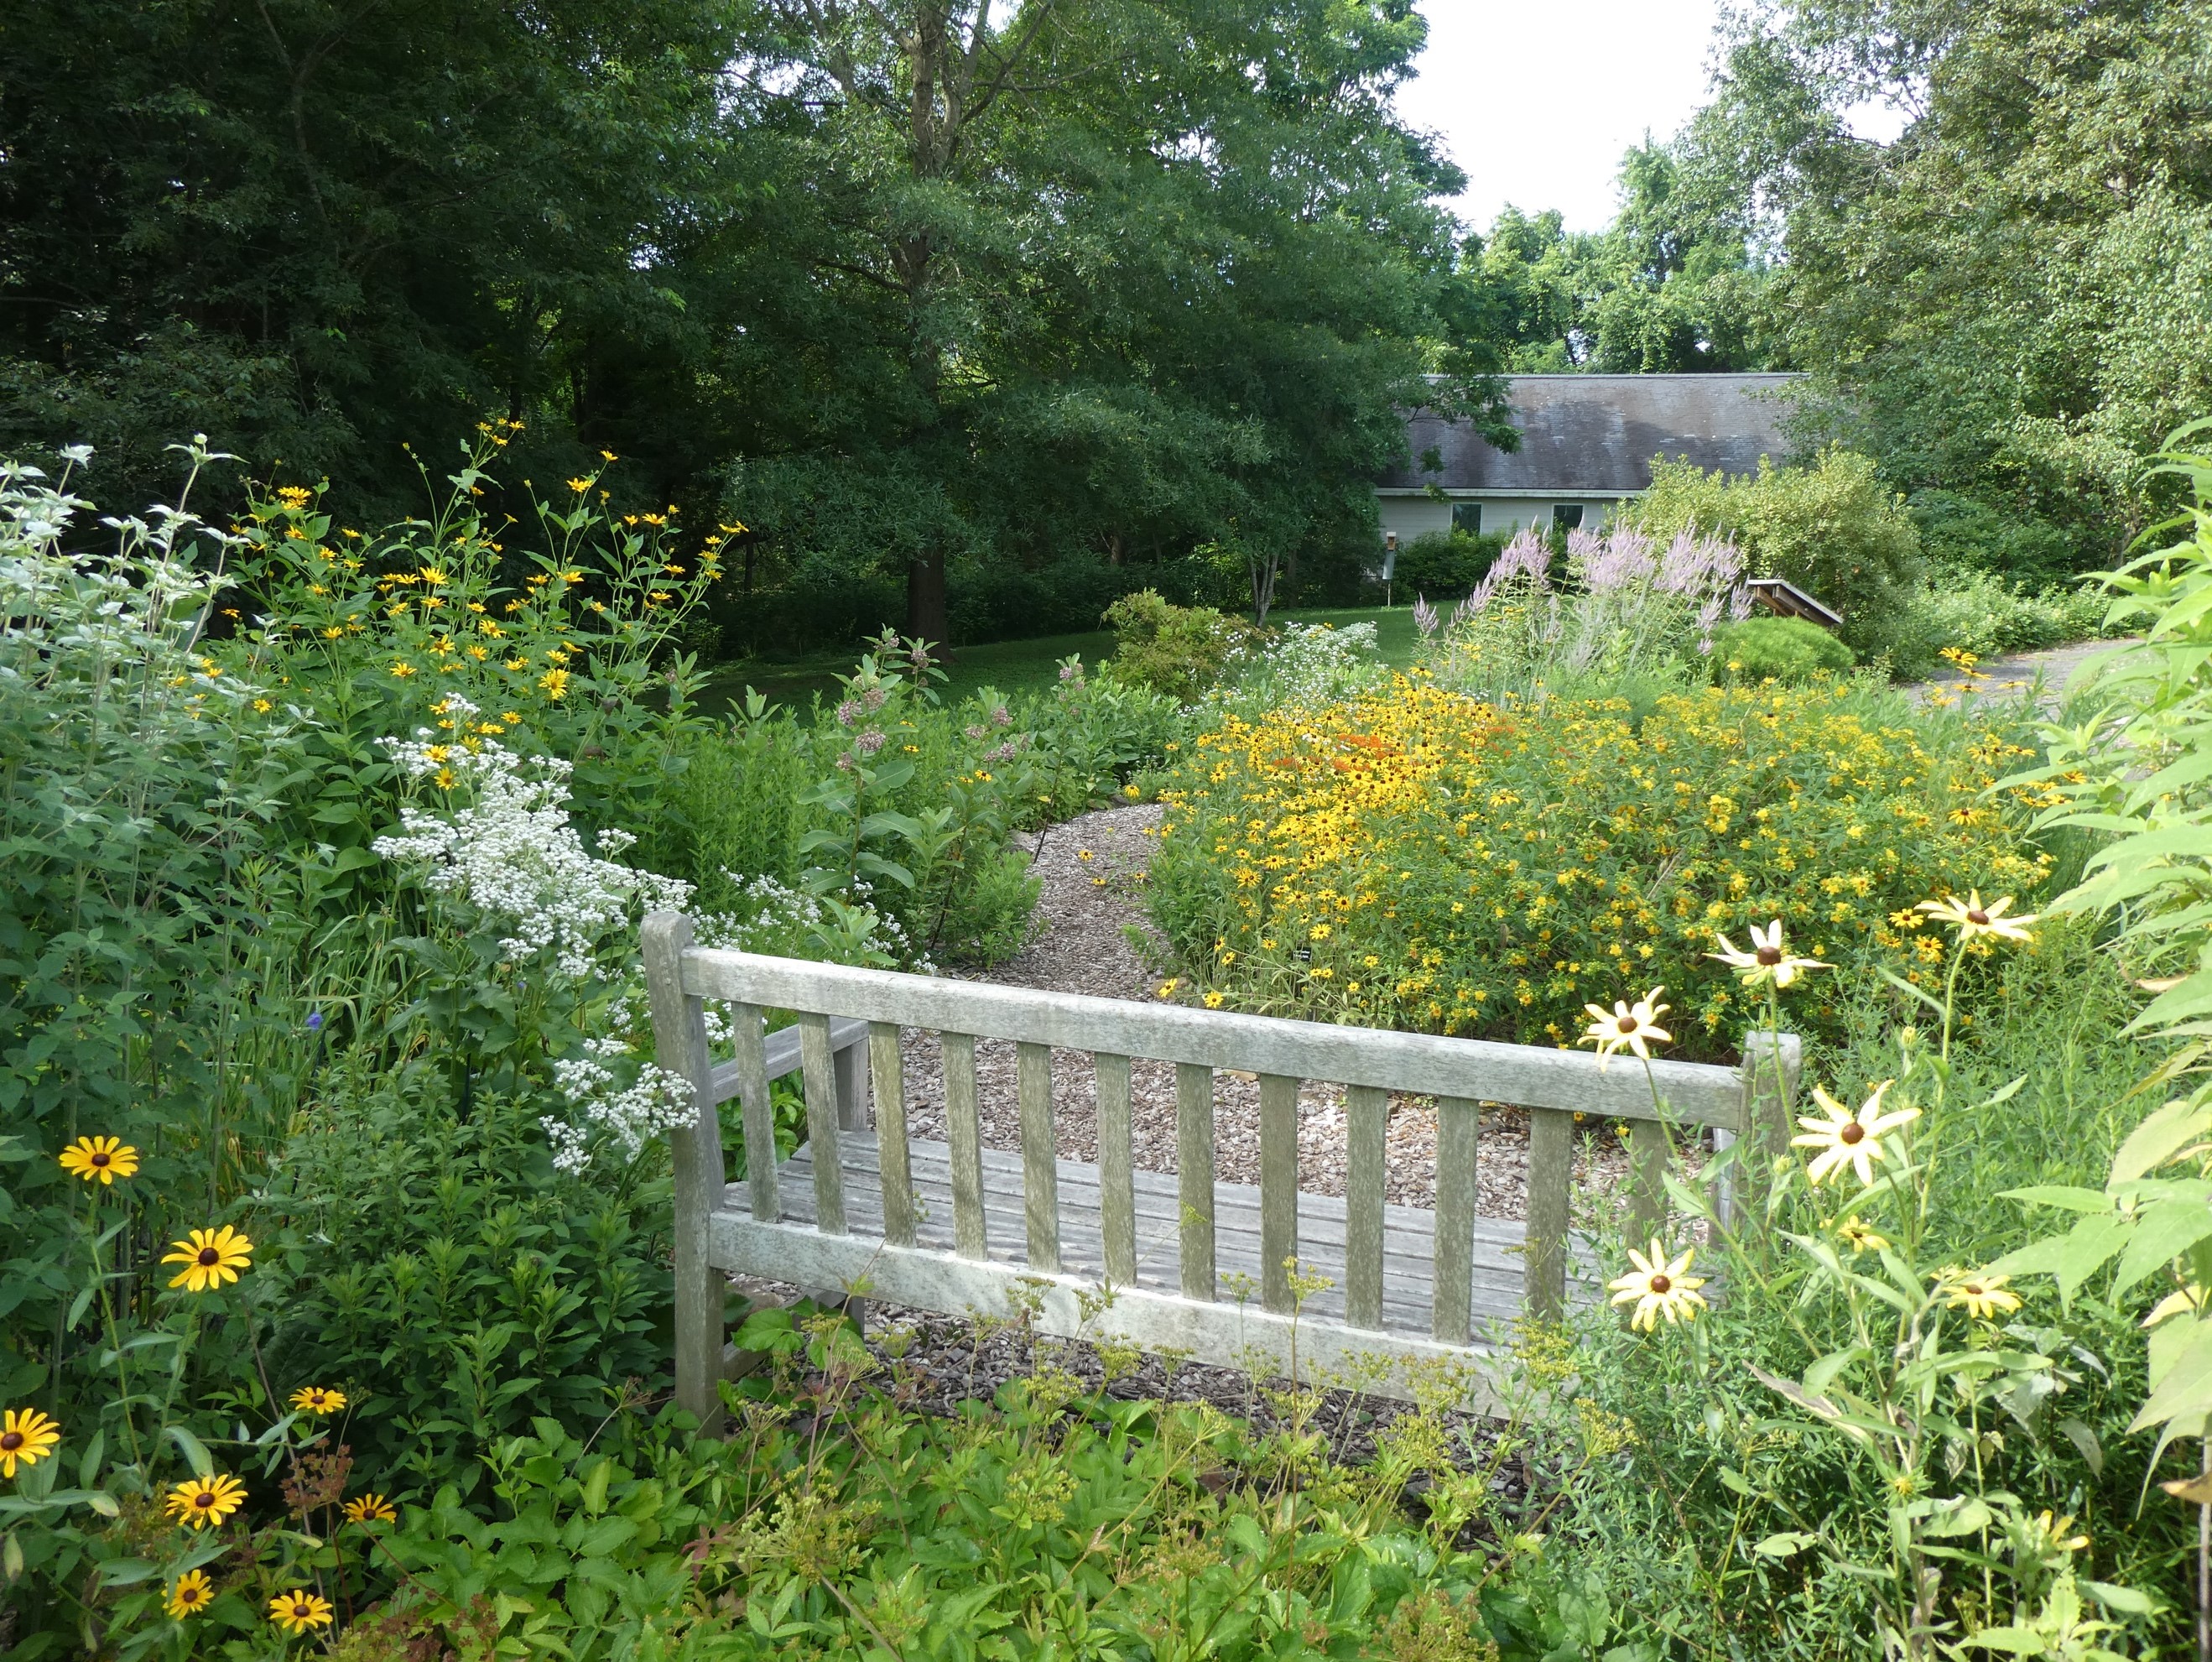 Pollinator garden bench